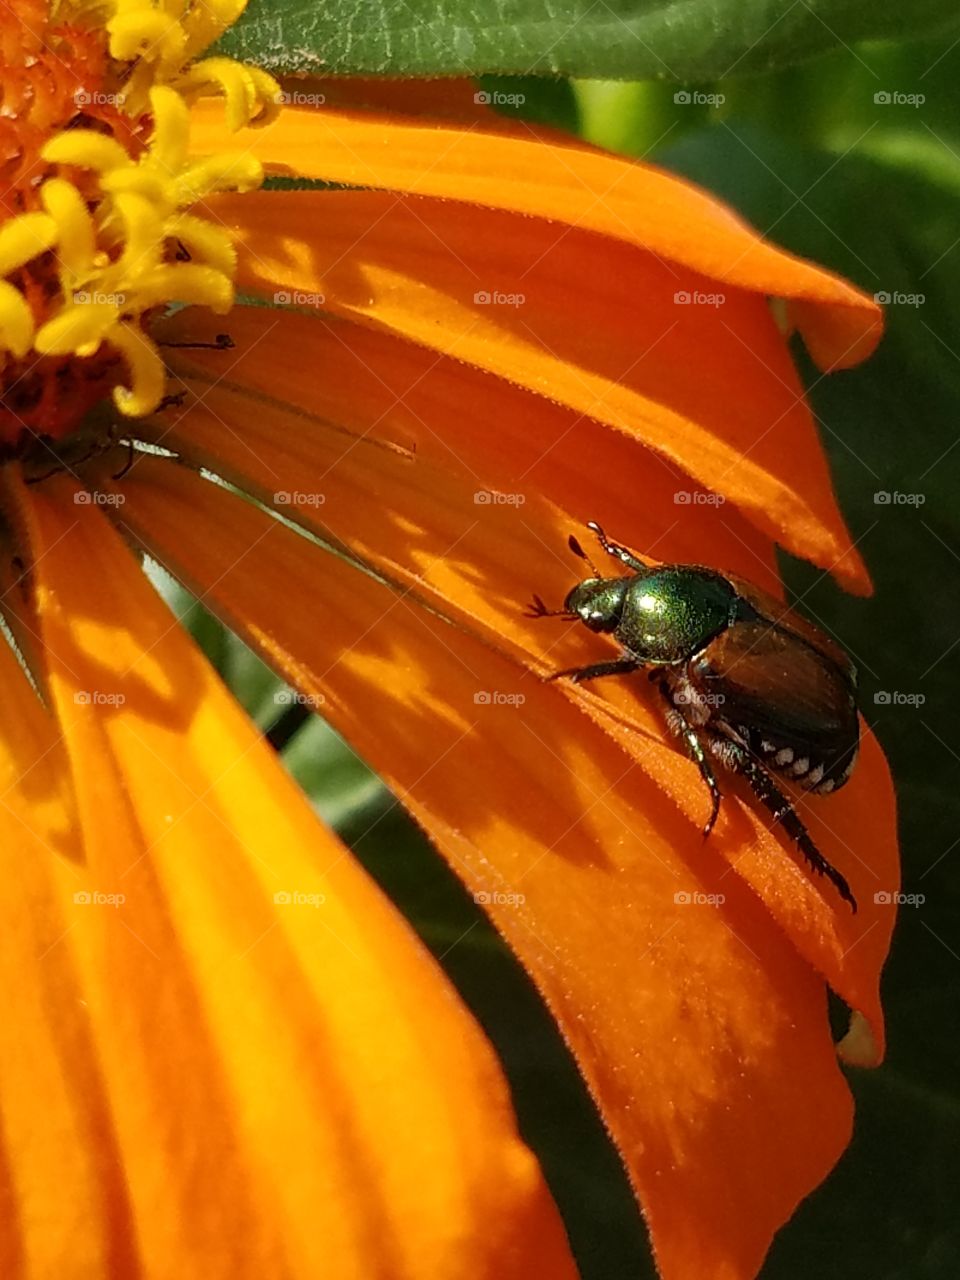 June bug on a petal